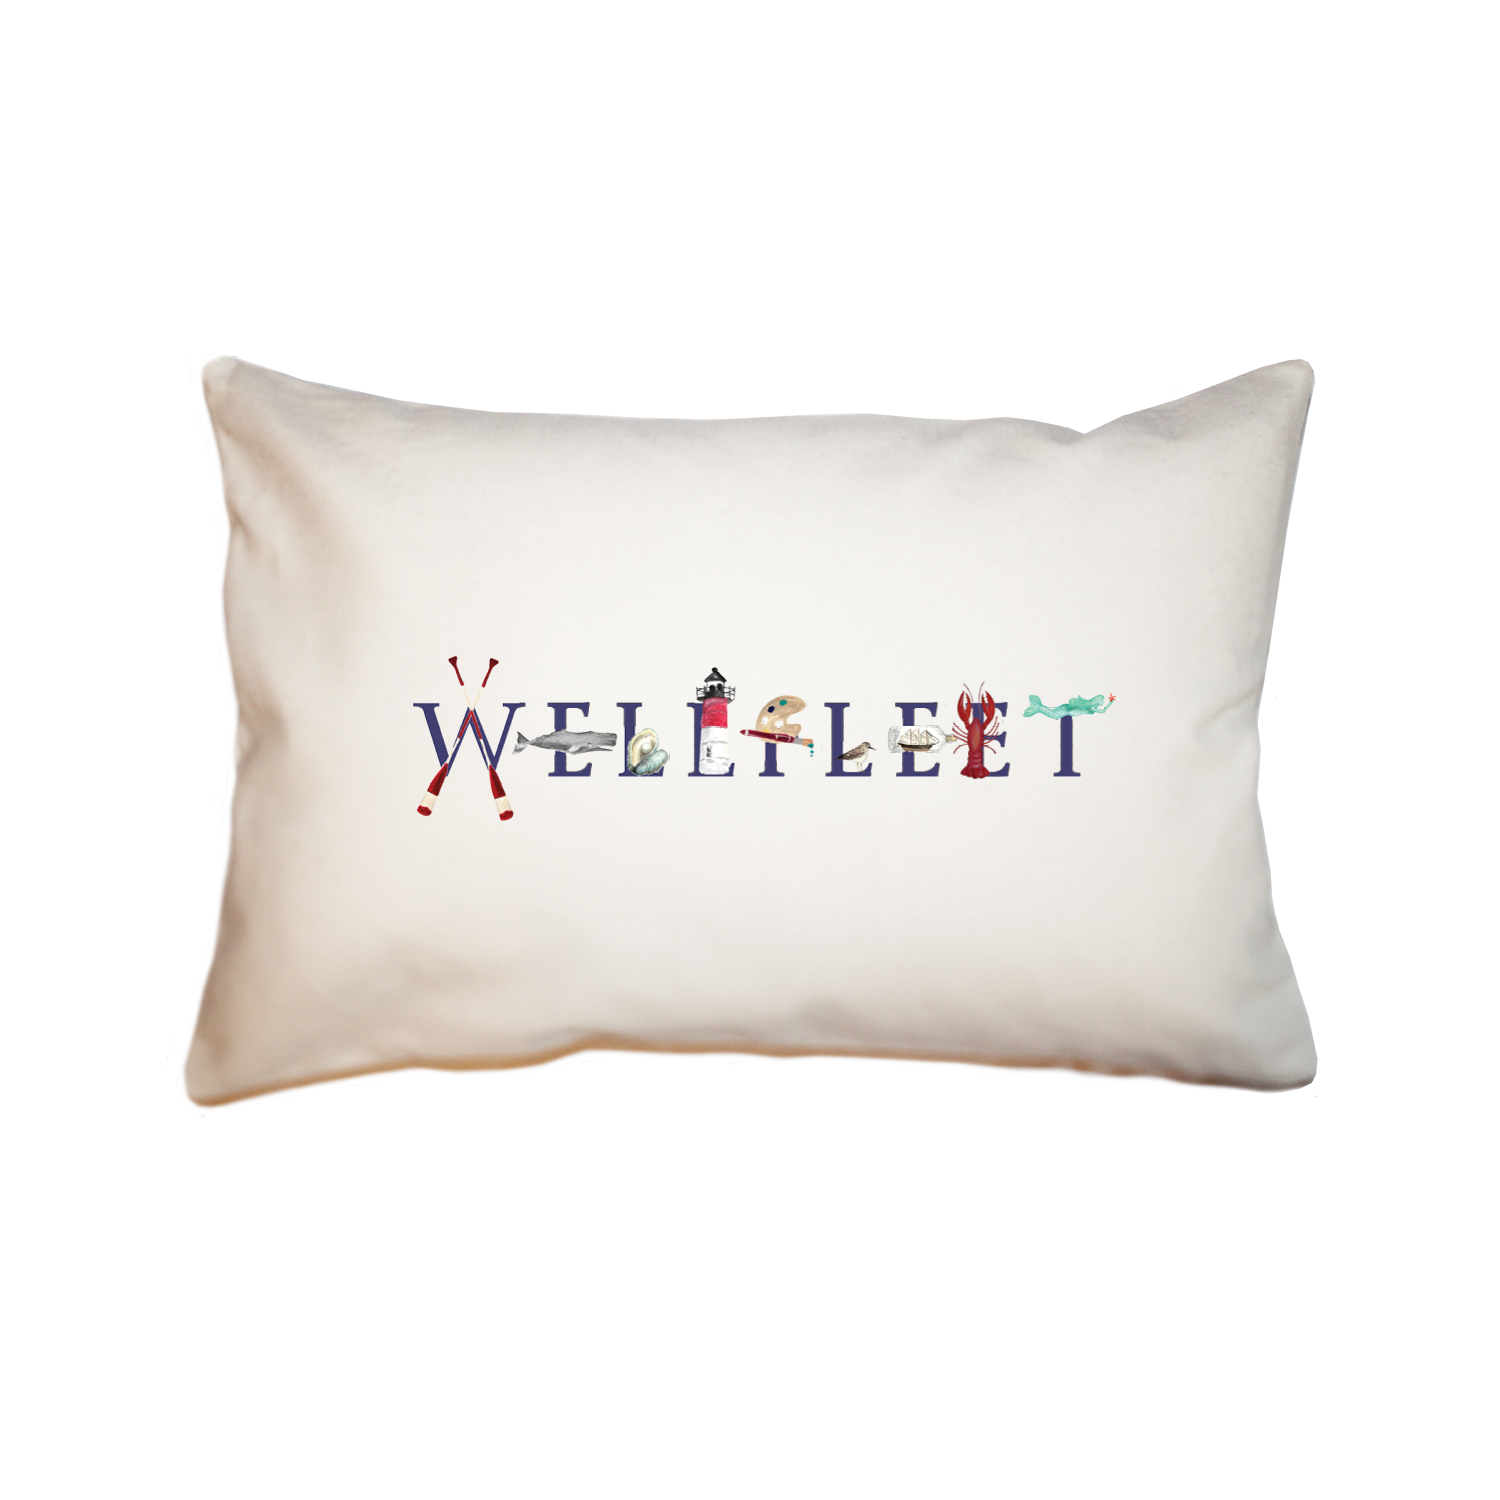 Wellfleet large rectangle pillow